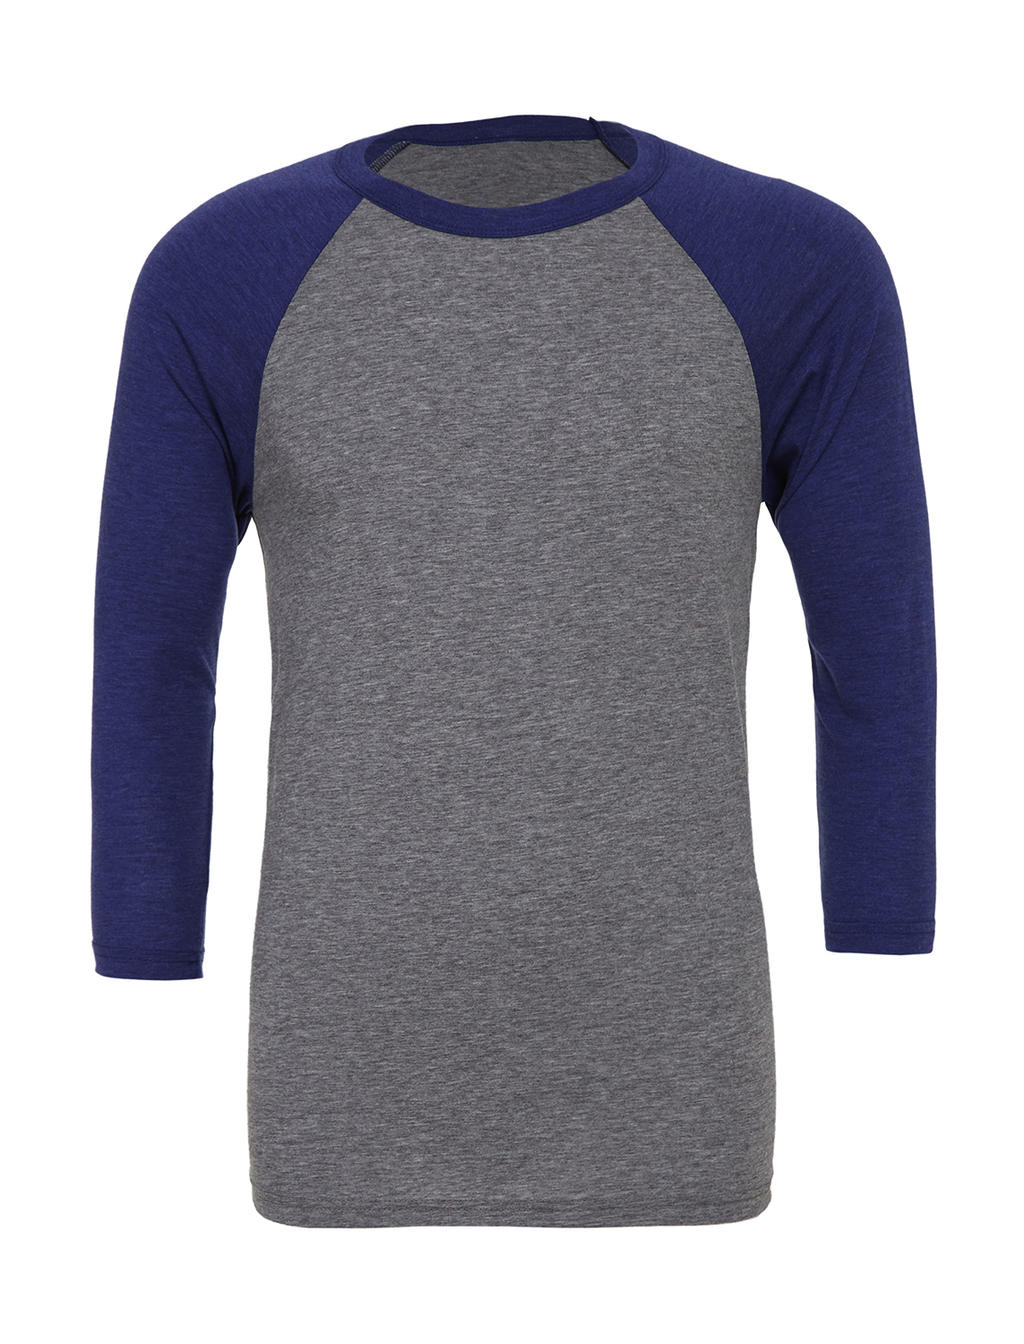  Unisex 3/4 Sleeve Baseball T-Shirt in Farbe Grey/Navy Triblend